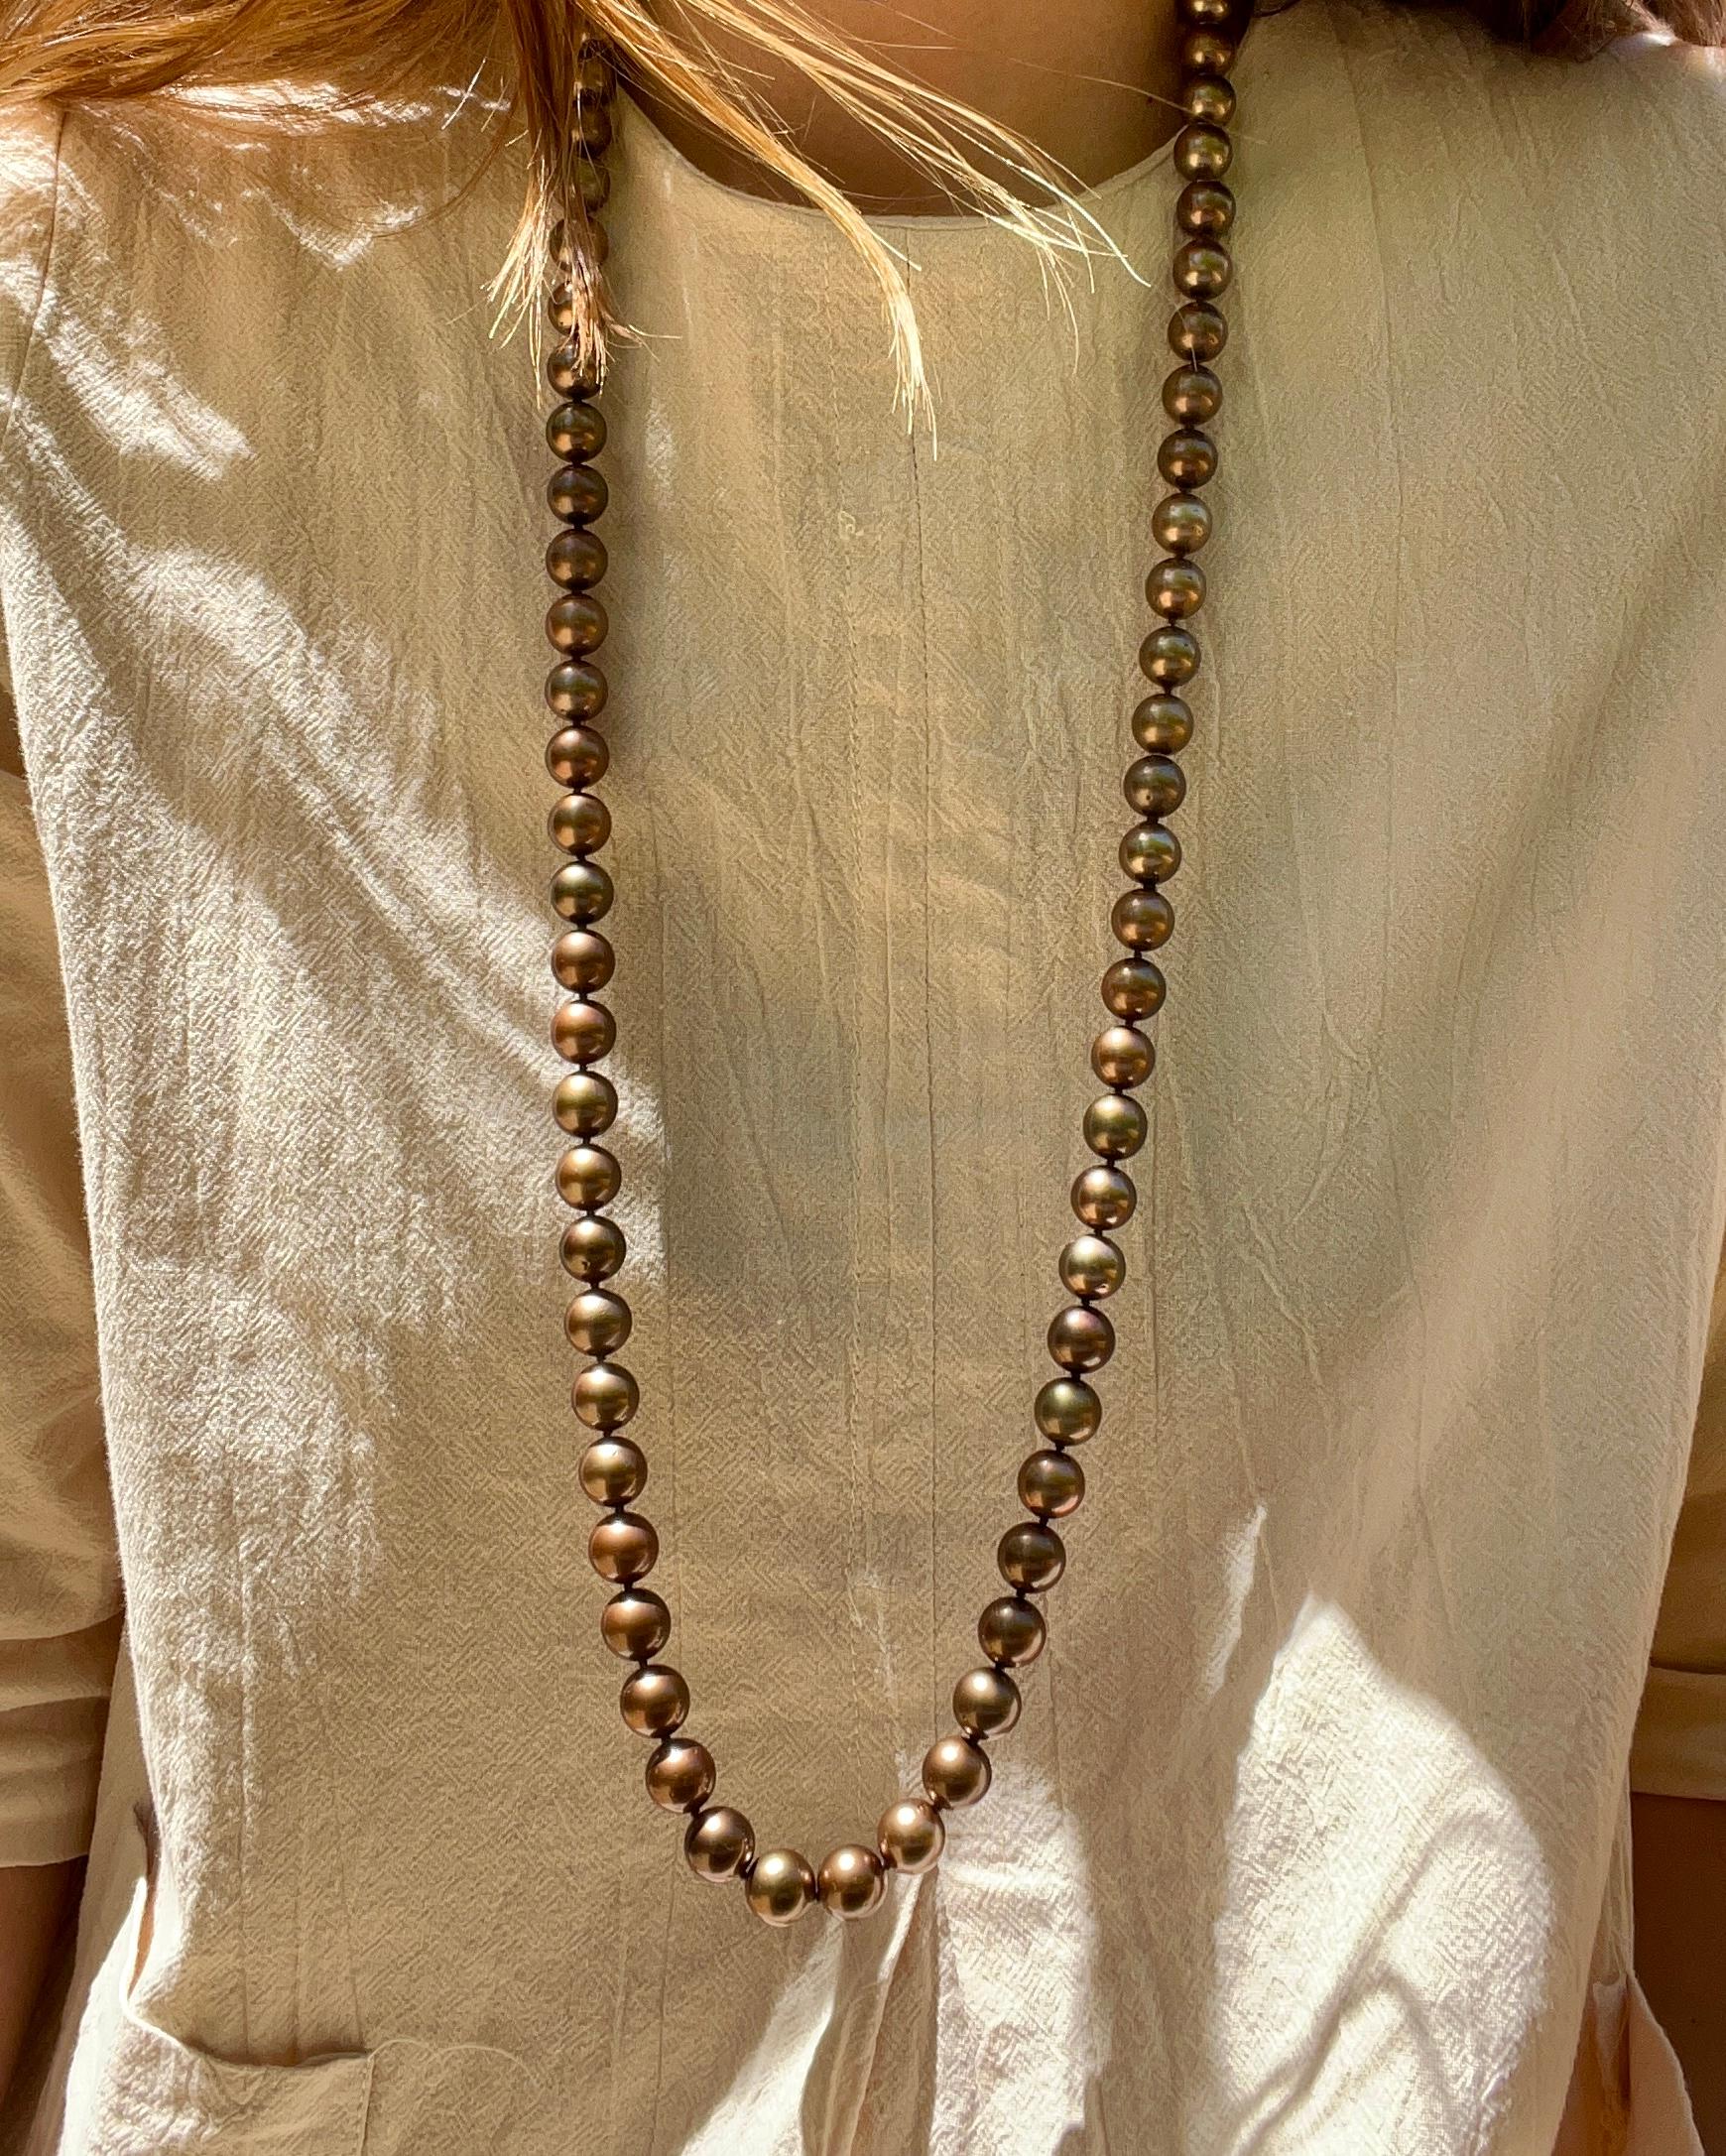 chocolate pearls jewelry